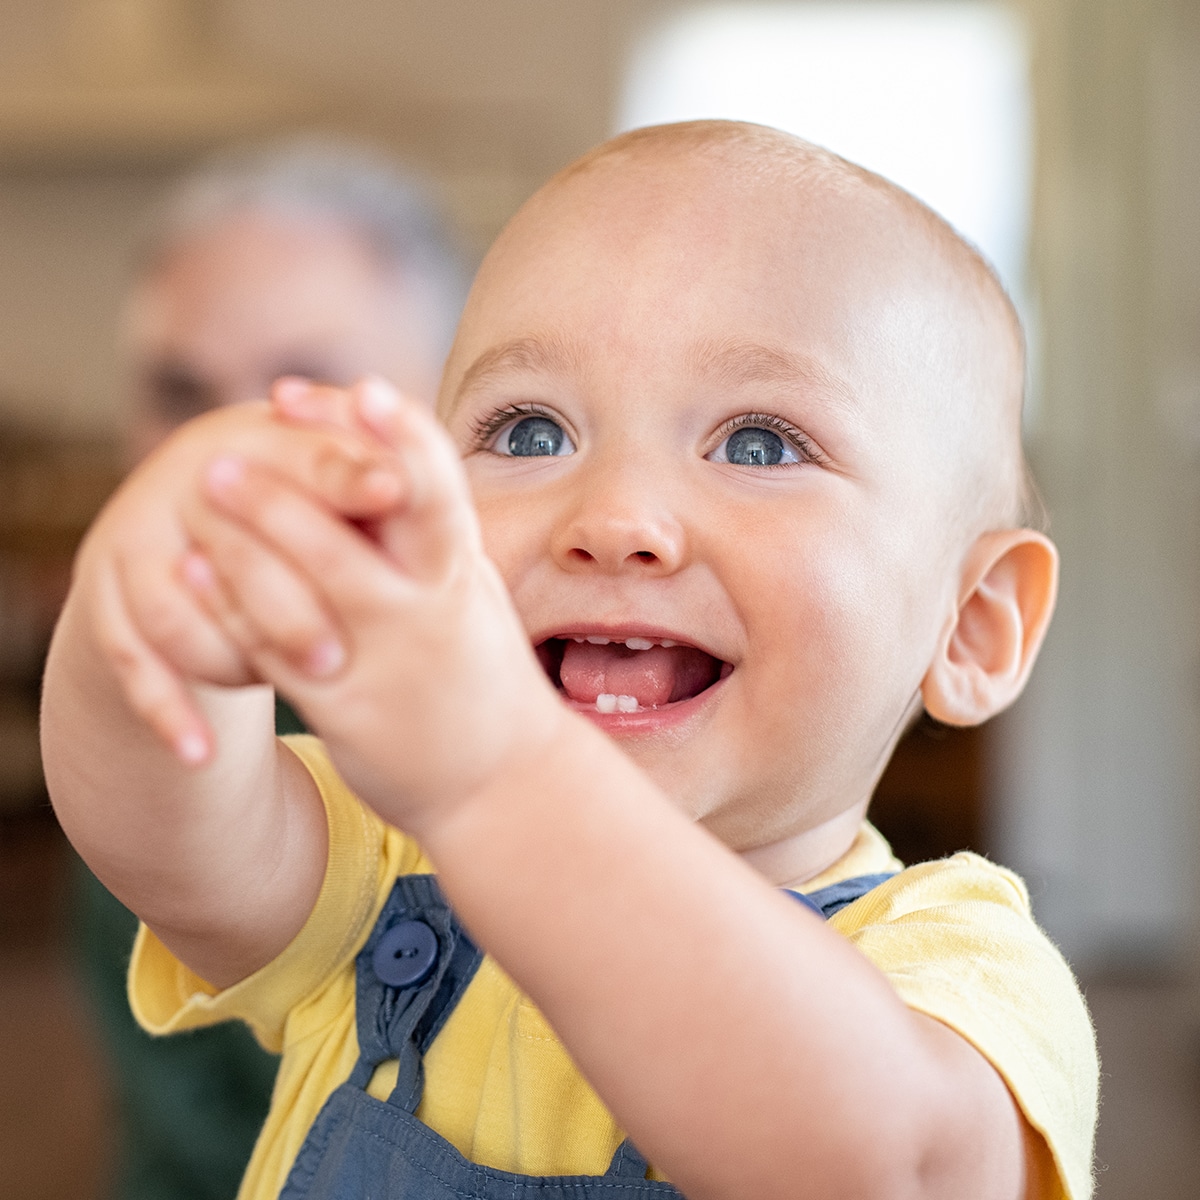 Baby Sign Language Supports Emerging Communication Skills